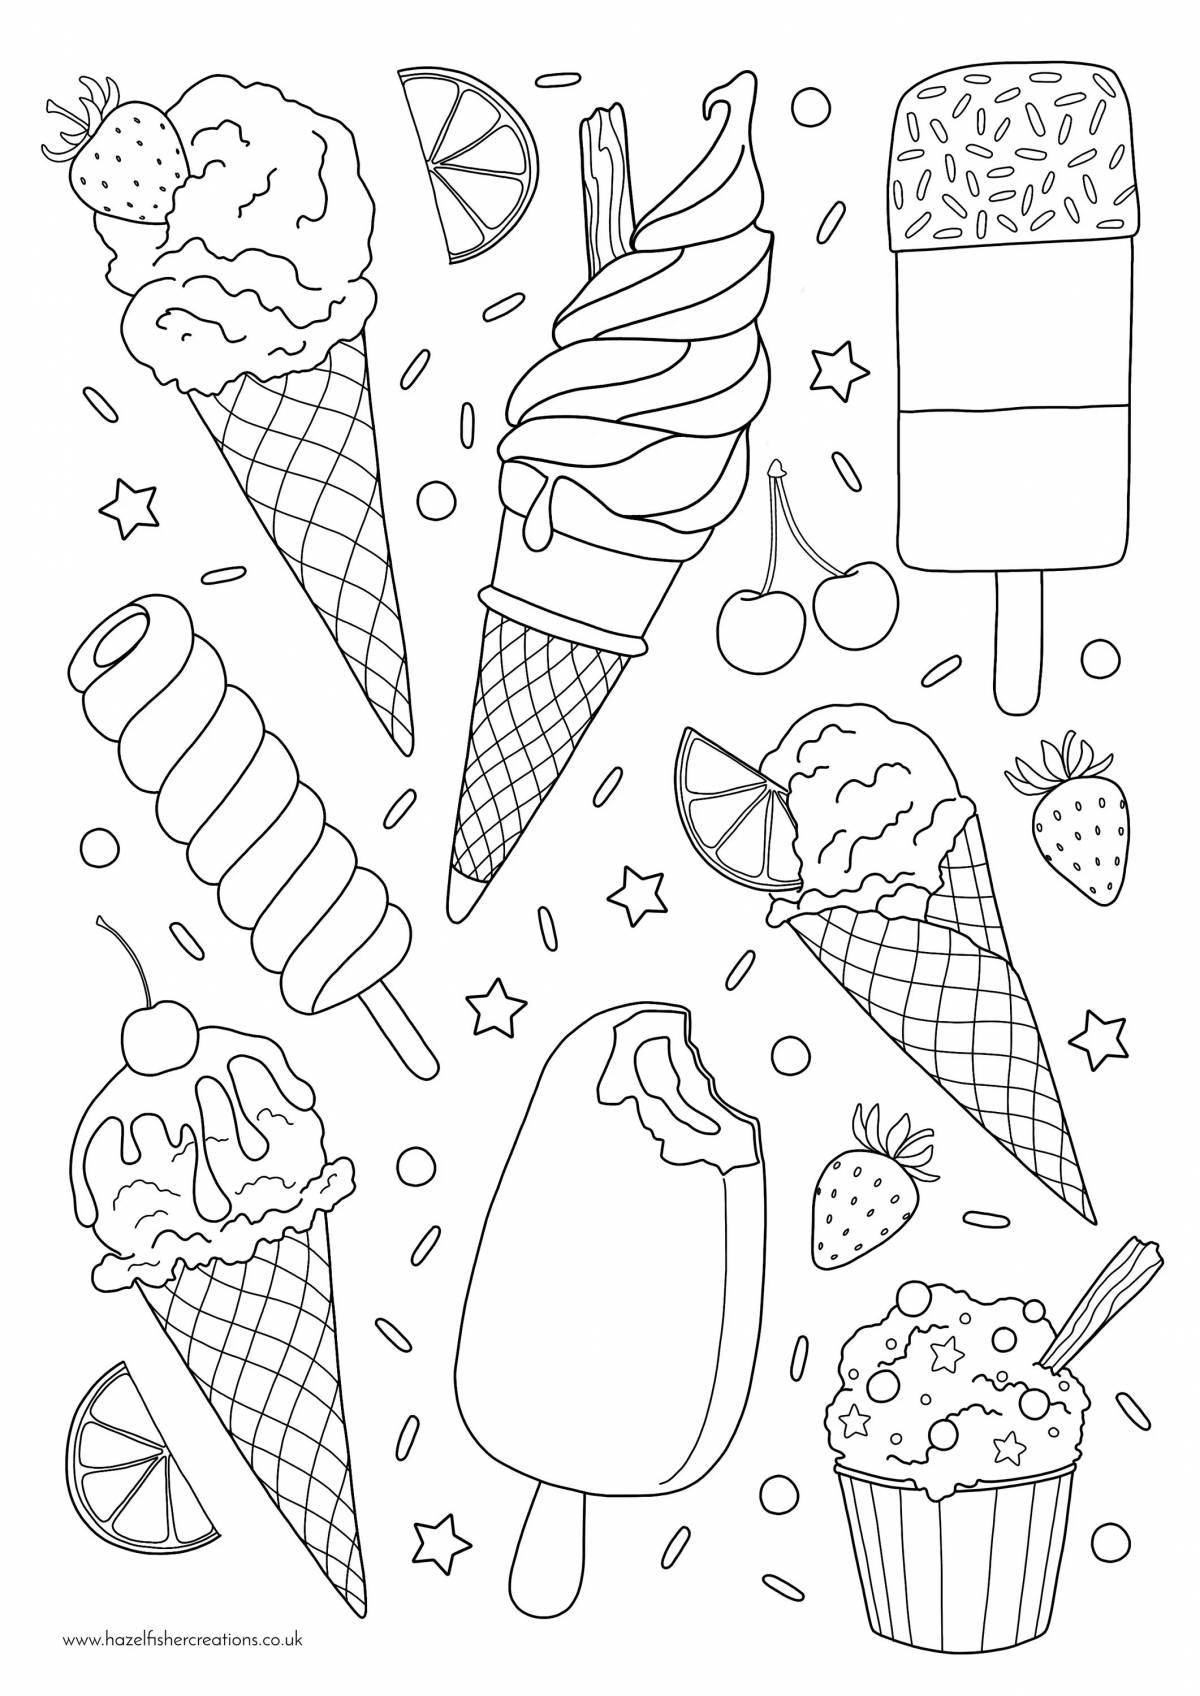 Colorful anti-stress edible ice cream